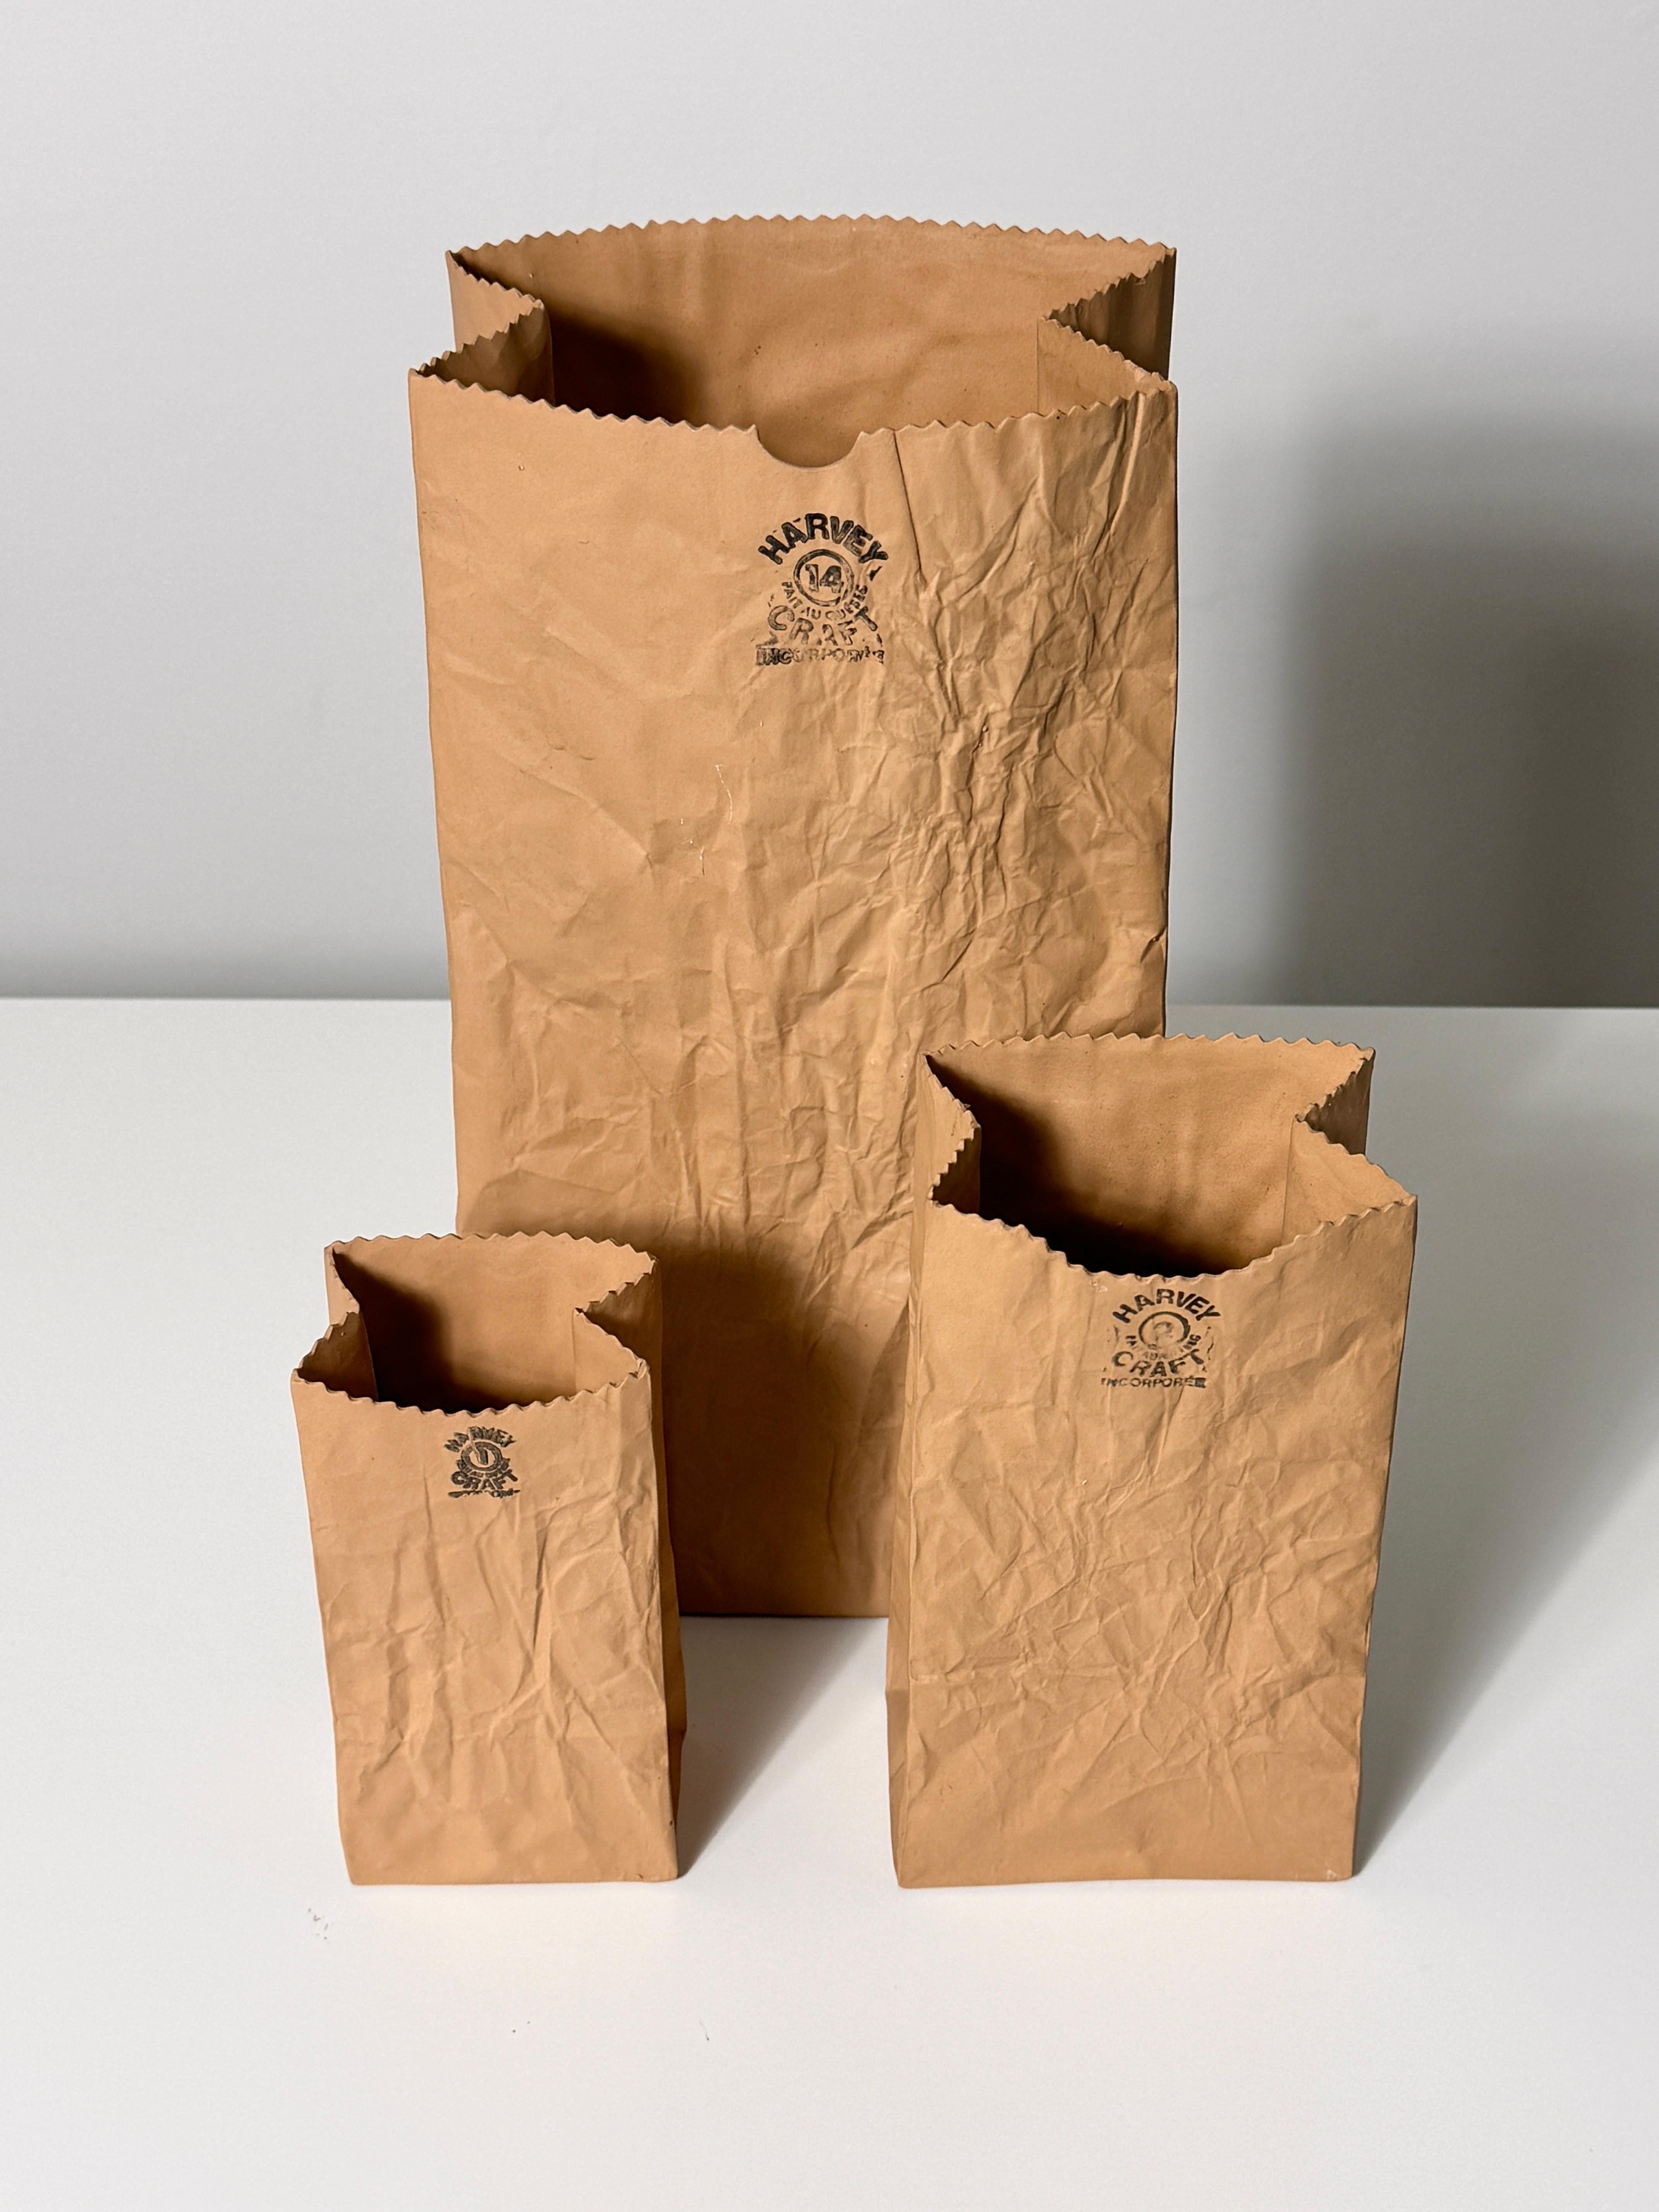 Mid-Century Modern Set of 3 Michael Harvey Craft Pop Art Ceramic Paper Bag Sculpture Vases 1970s